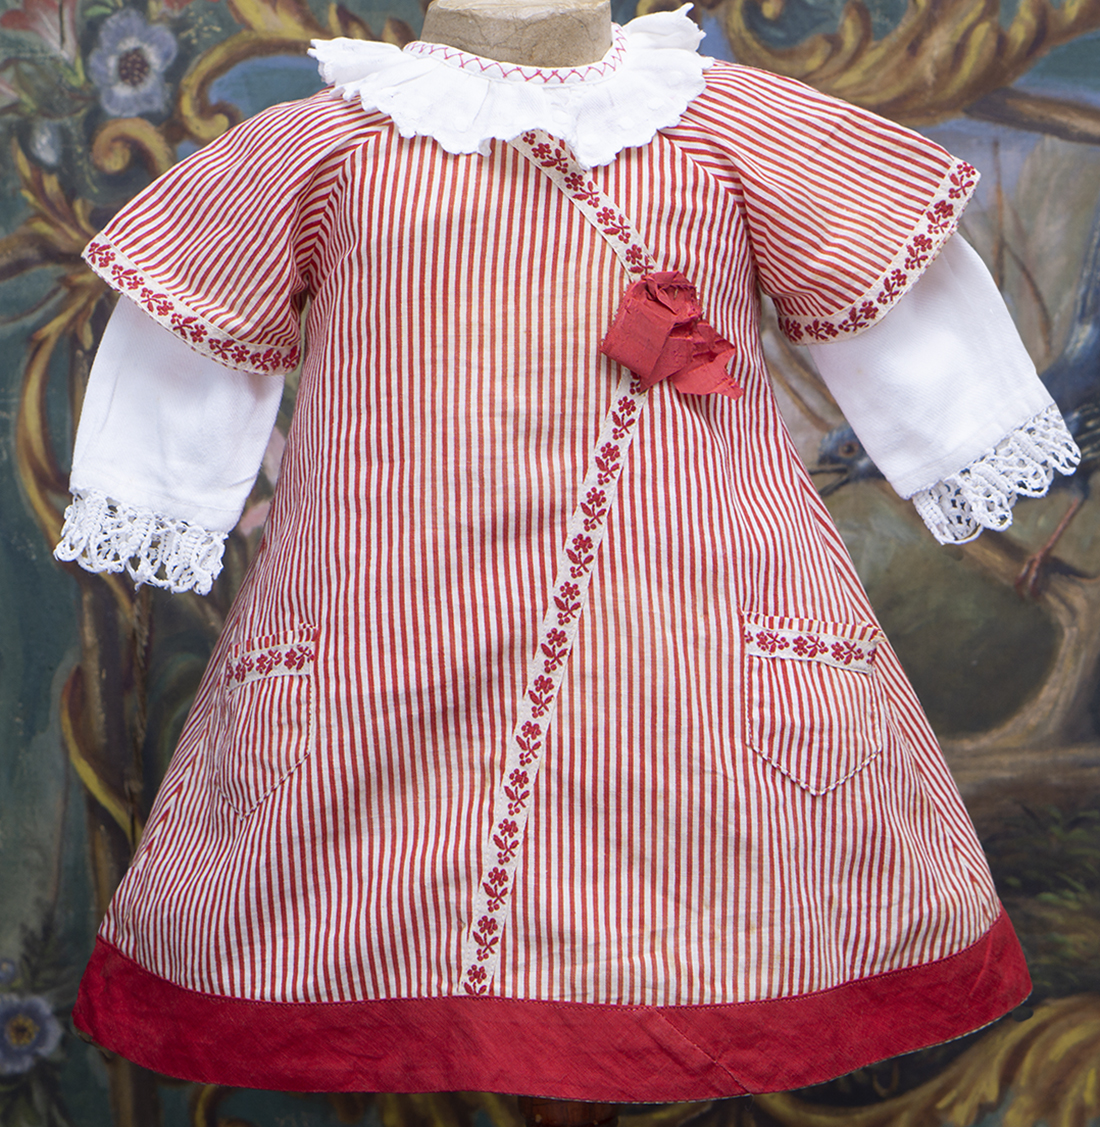 Antique doll Pinafore dress